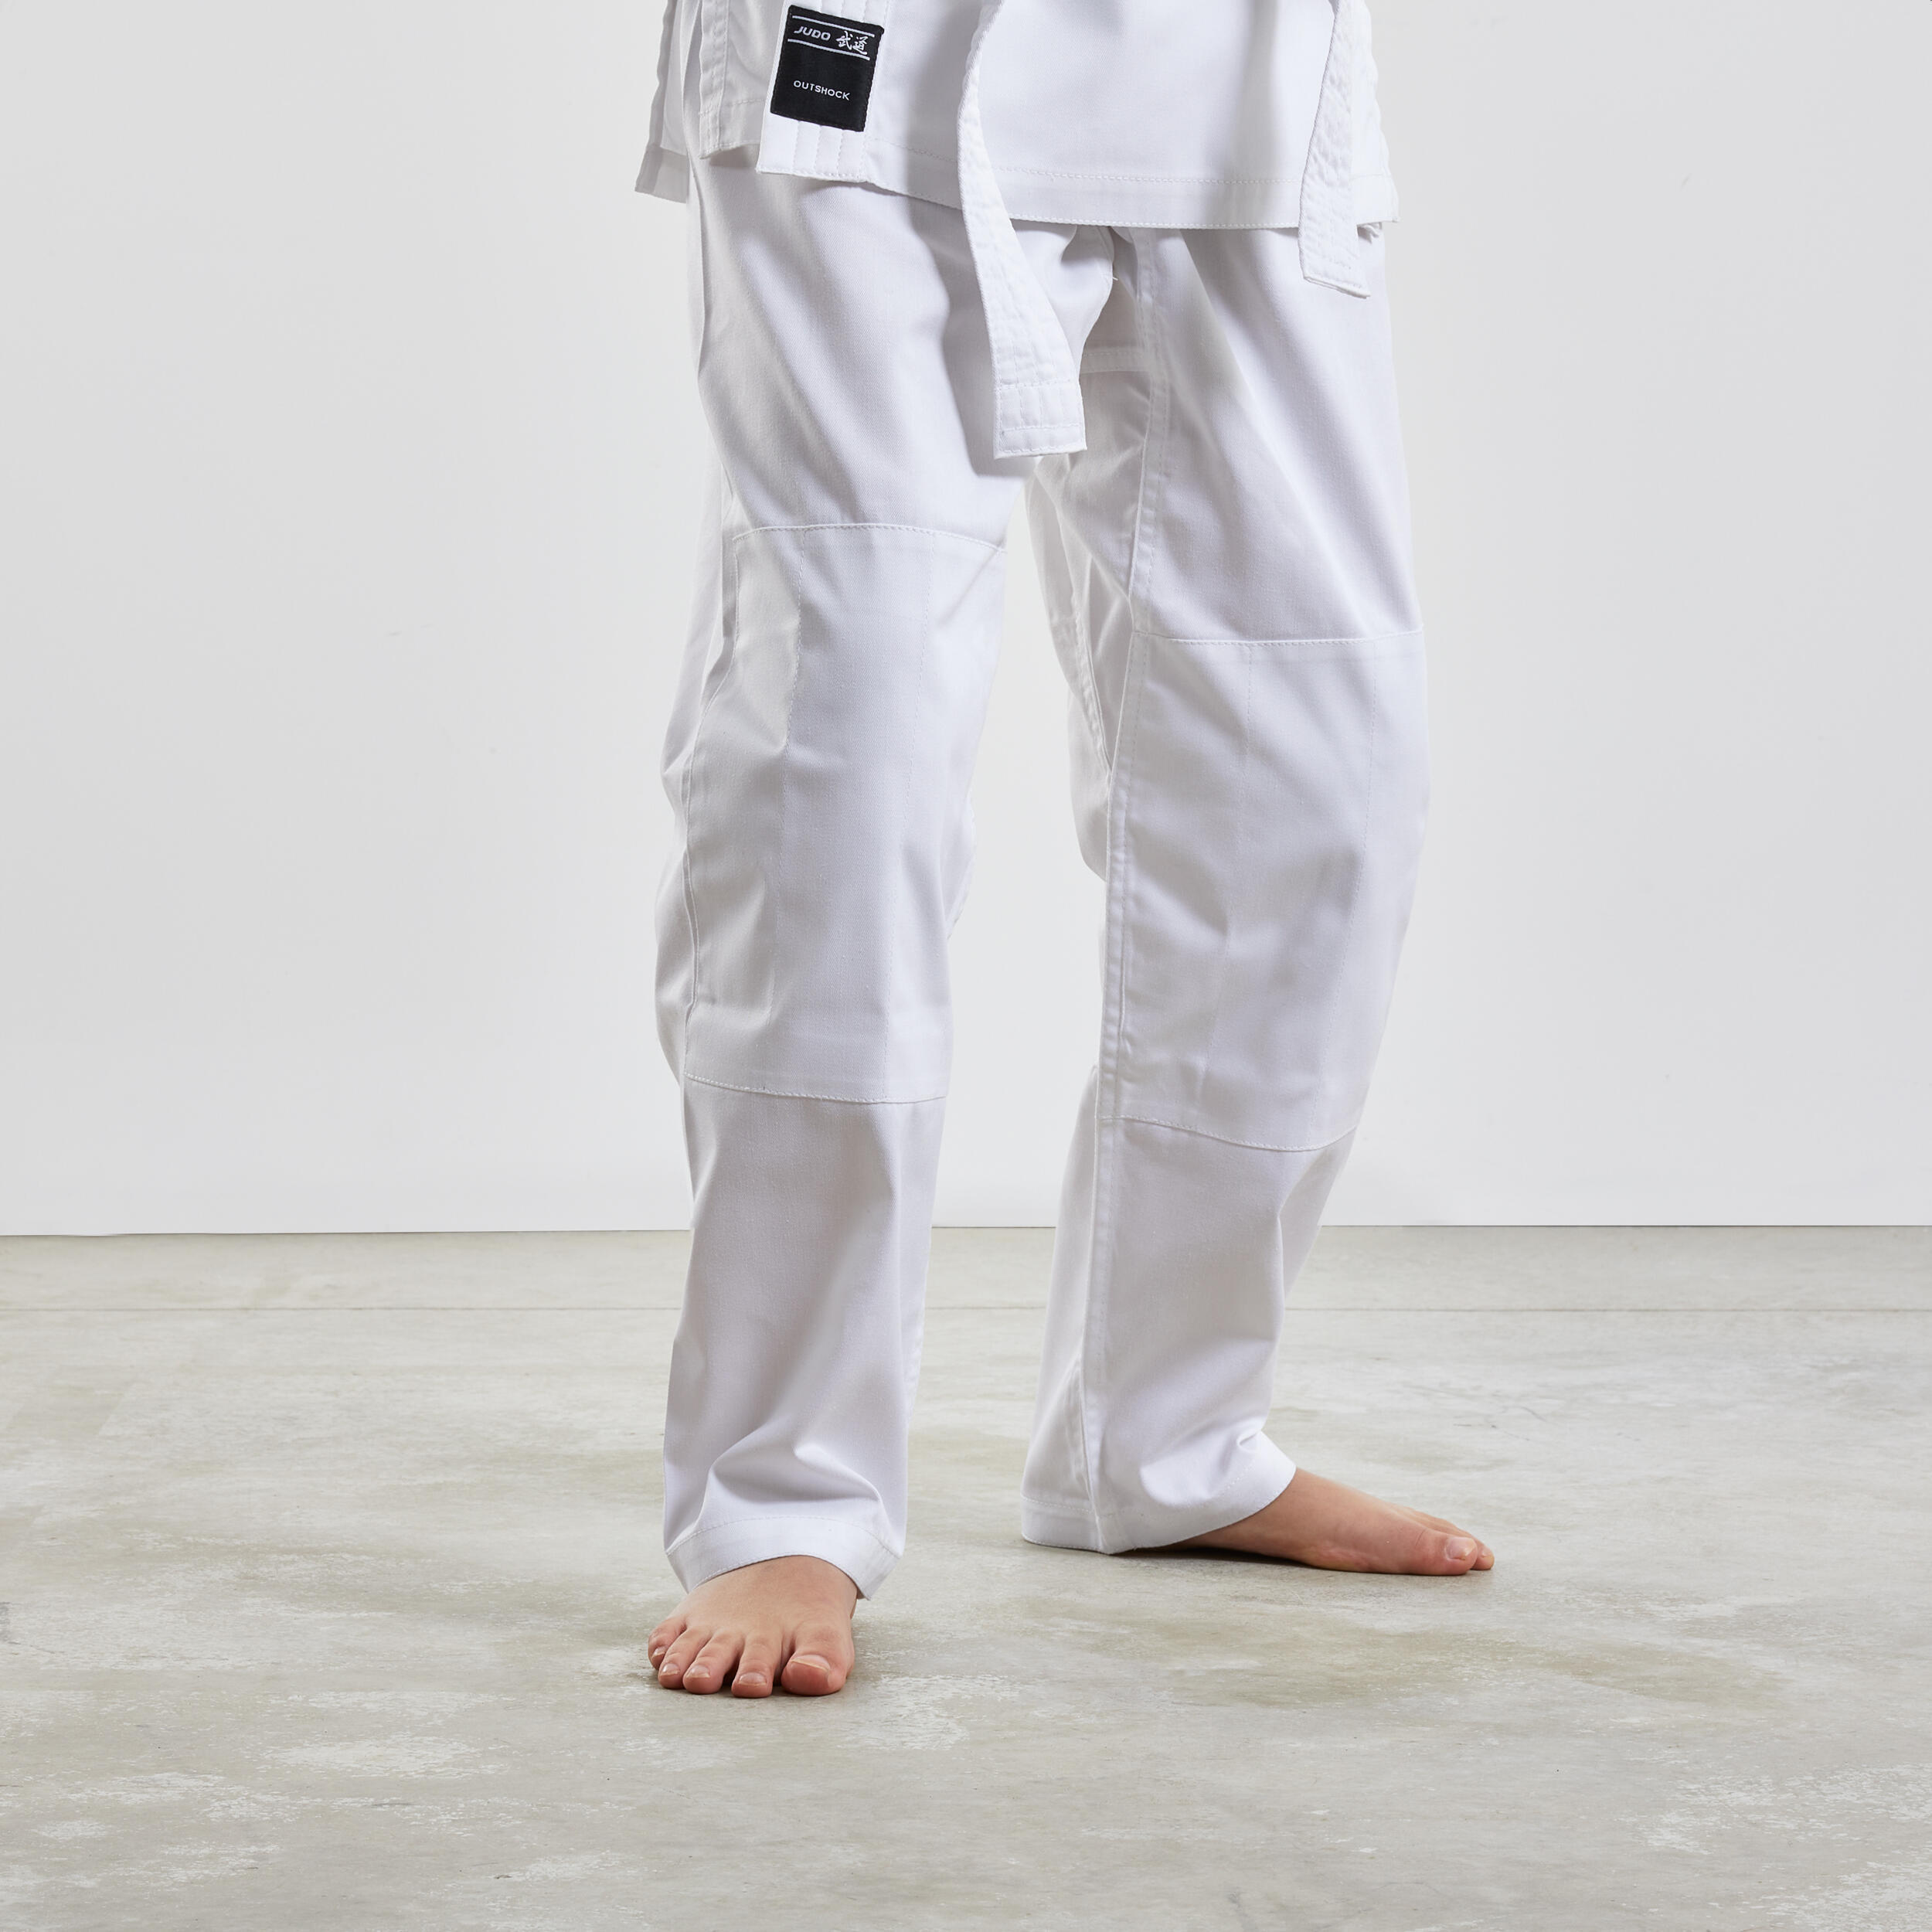 Refurbished Kids Judo Uniform 100 - A Grade 4/7